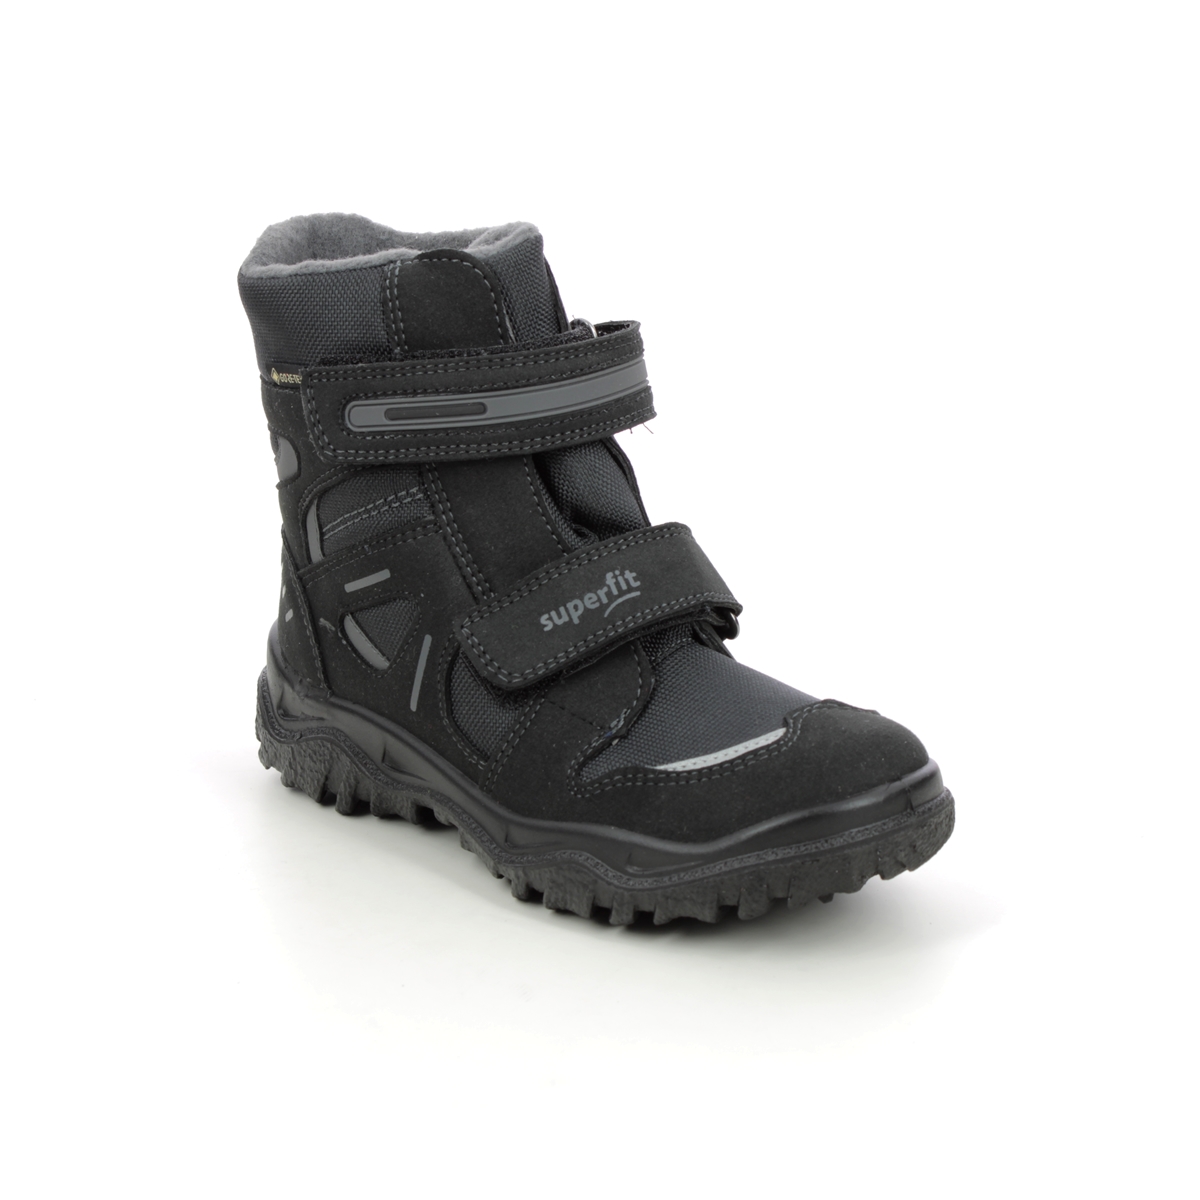 Superfit Husky Jnr Gore Black Kids Boys Boots 0809080-0600 In Size 37 In Plain Black For kids